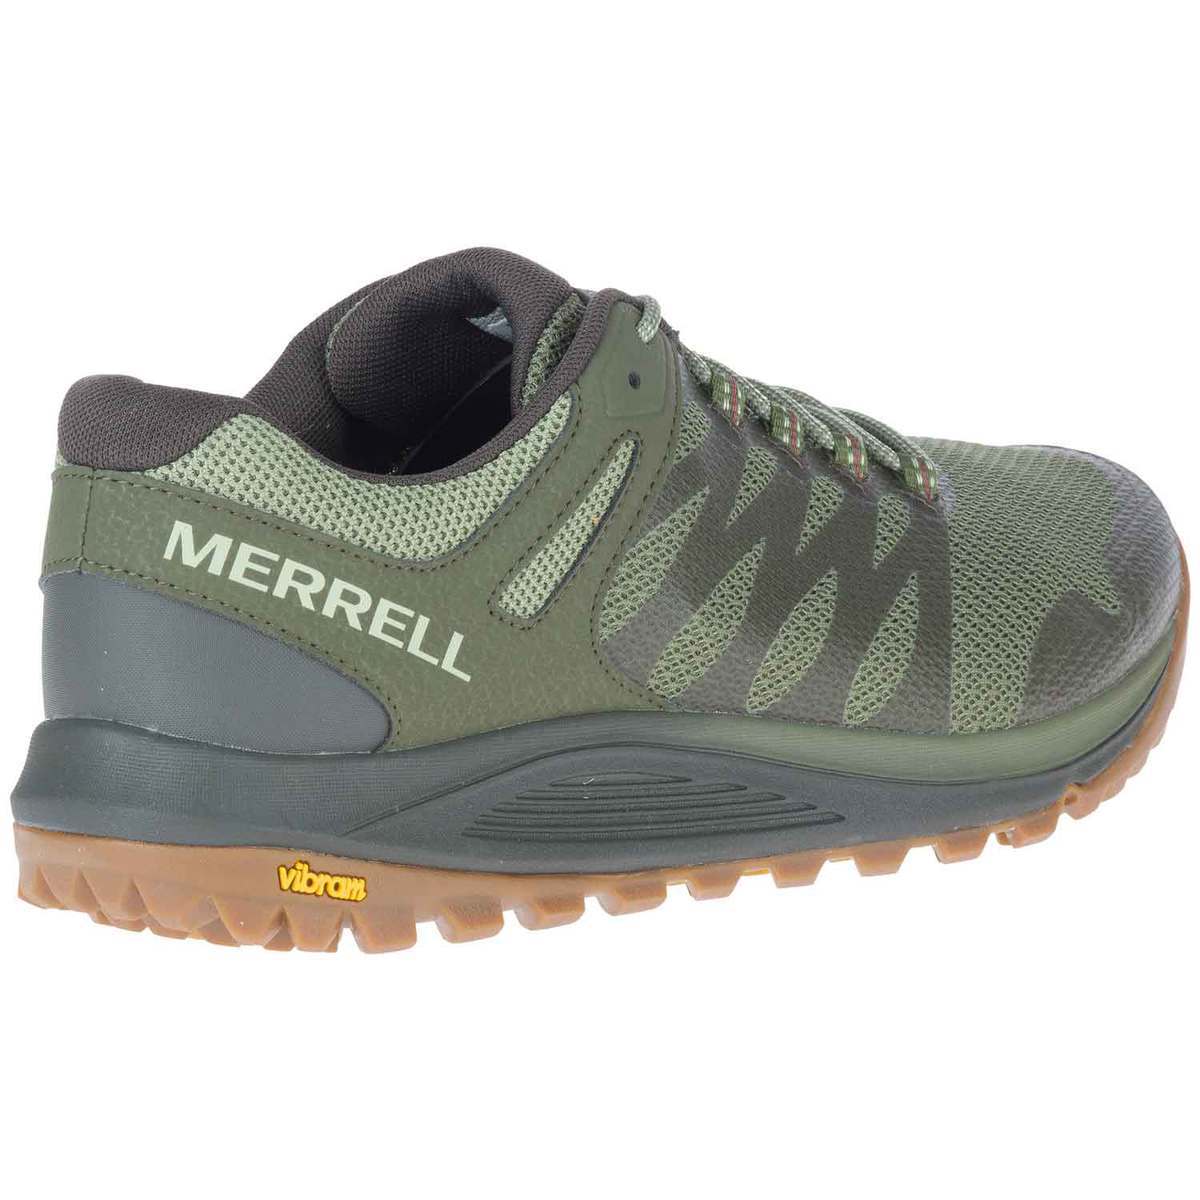 Merrell Men's Nova 2 Trail Running Shoes - Olive - Size 10 - Olive 10 ...